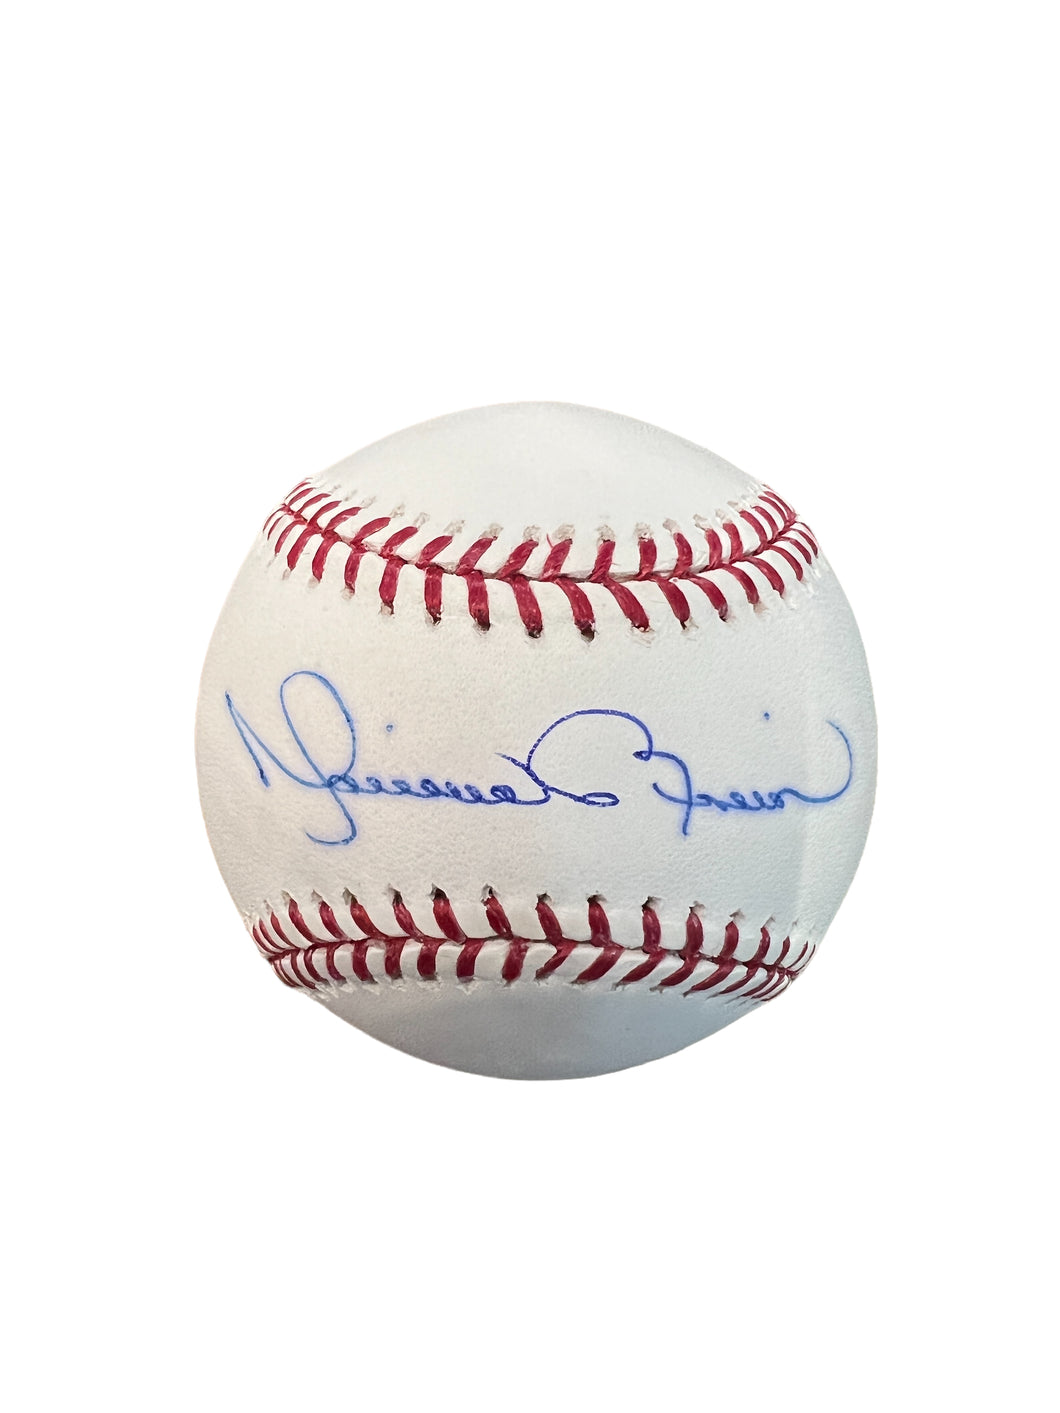 Pelota Baseball / Yankees / Mariano Rivera